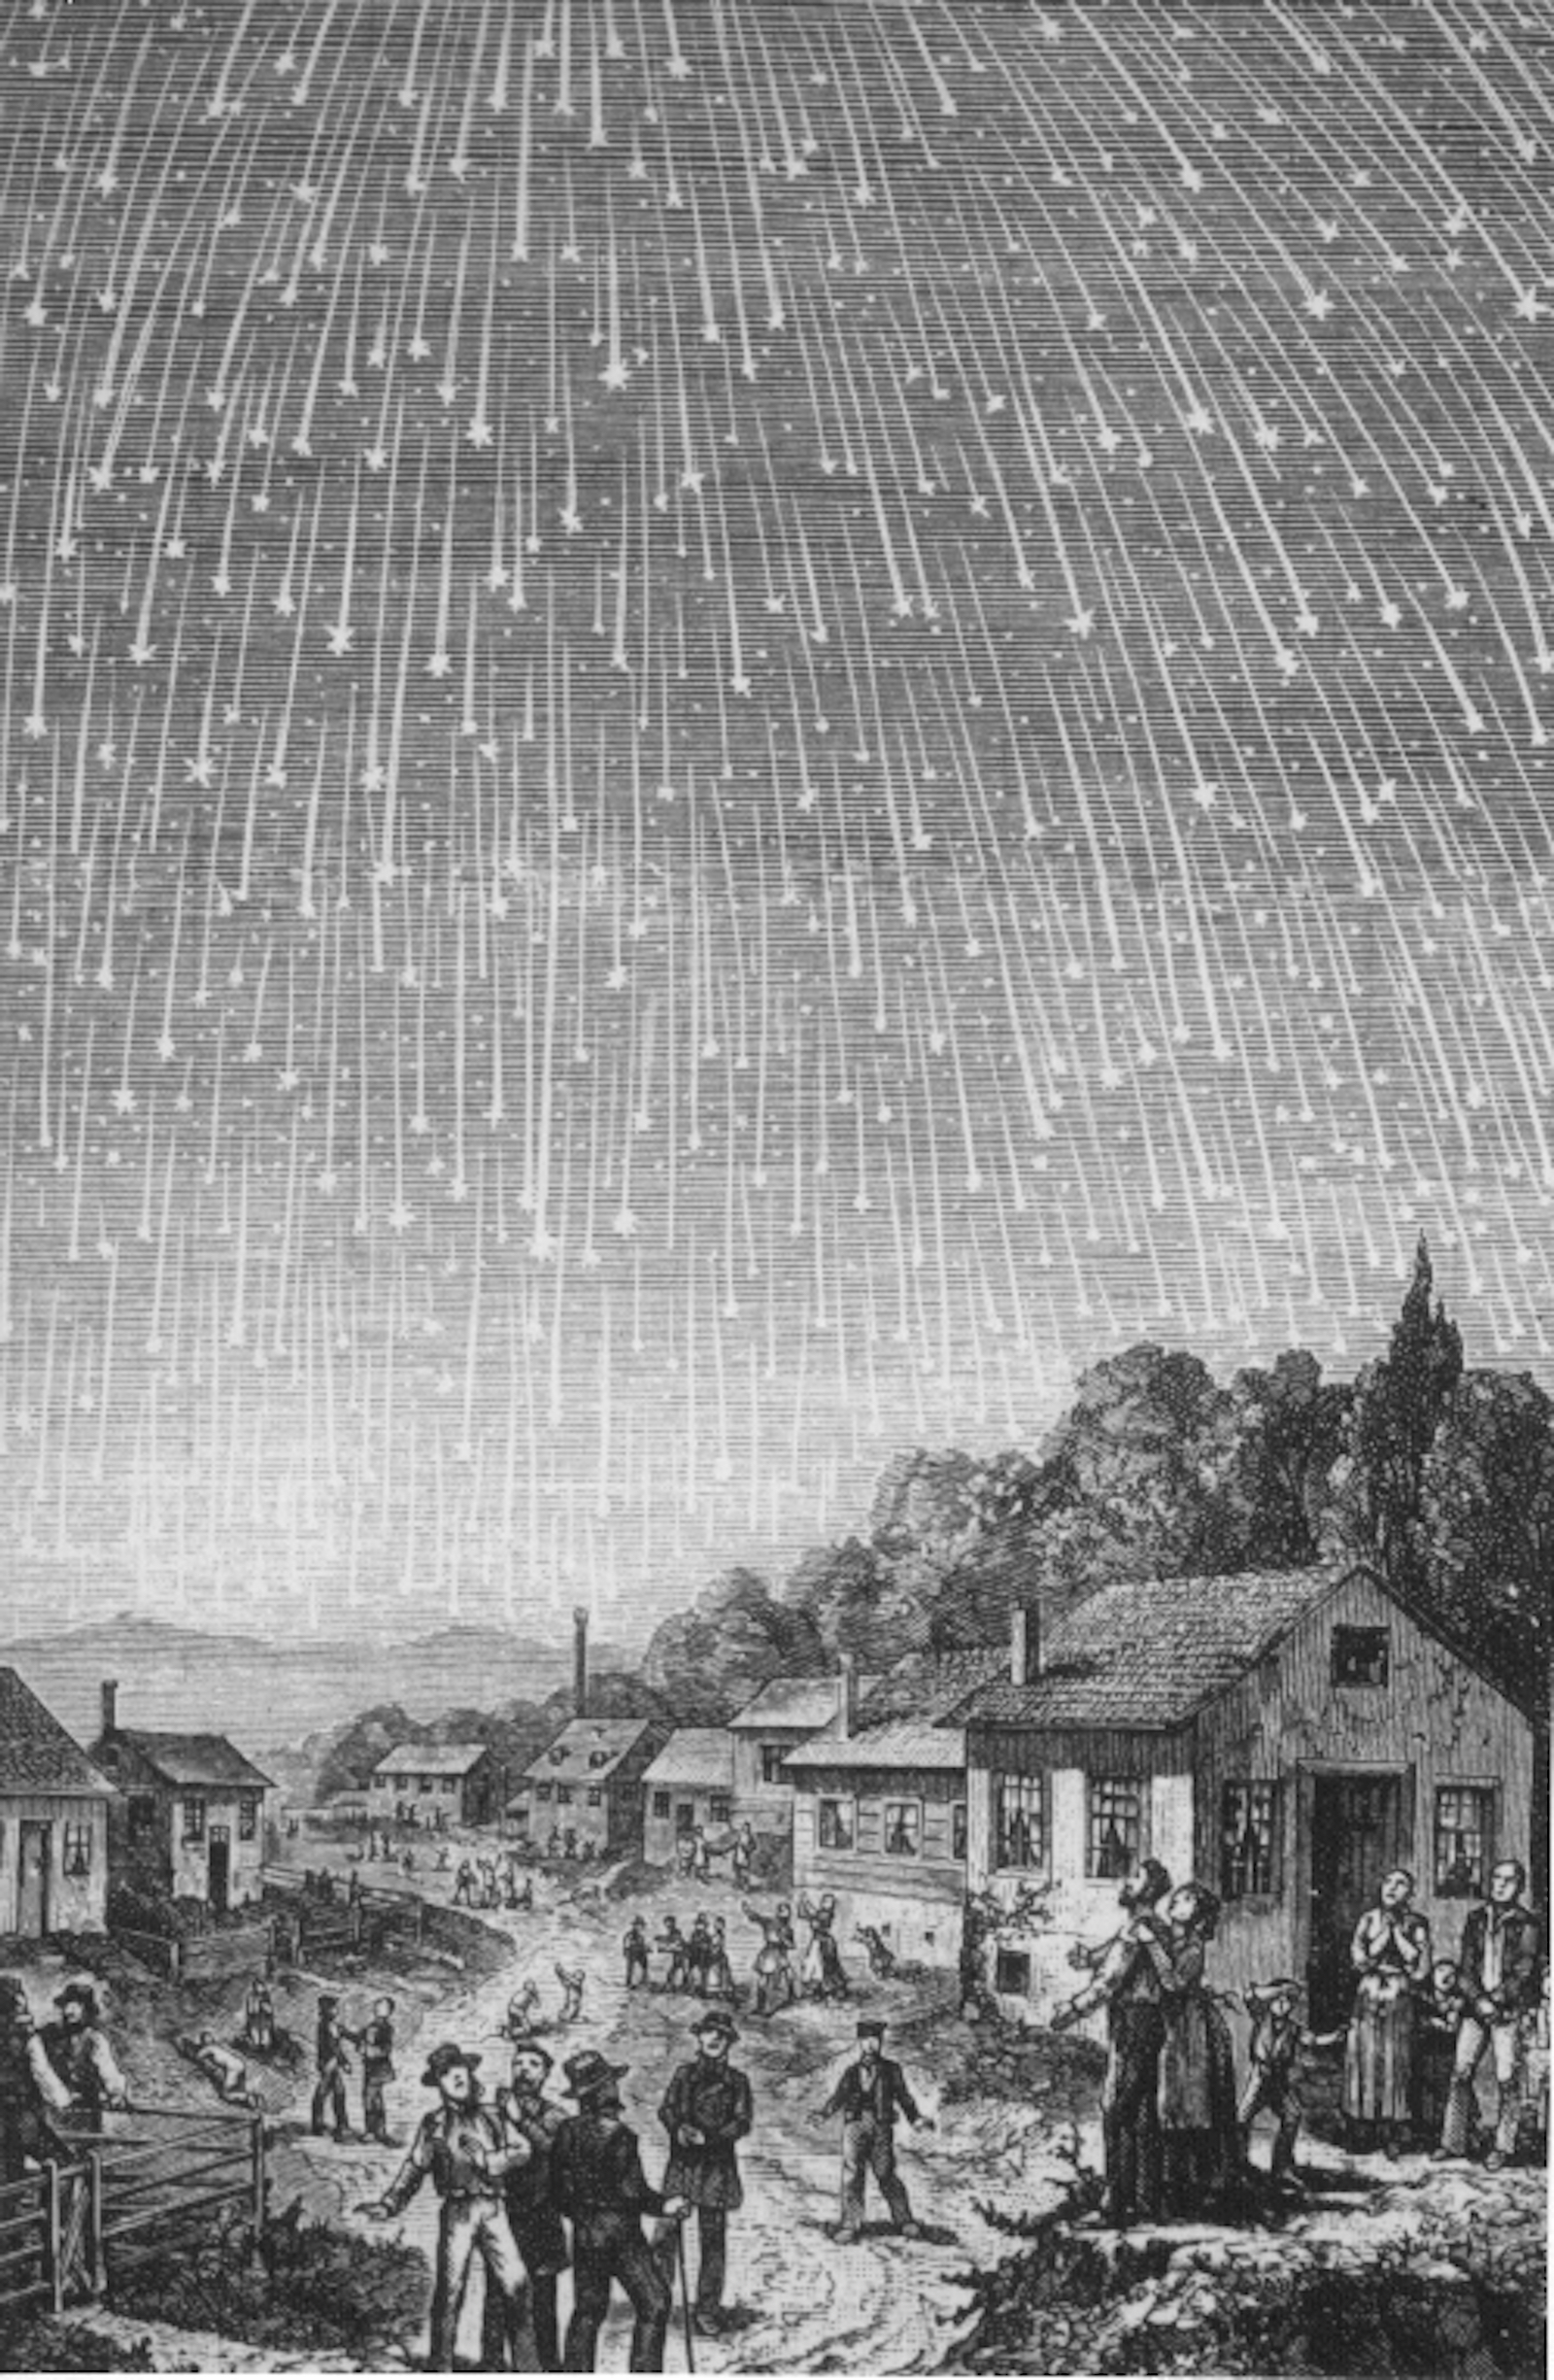 Artist’s impression of the 1833 Leonid meteor storm.